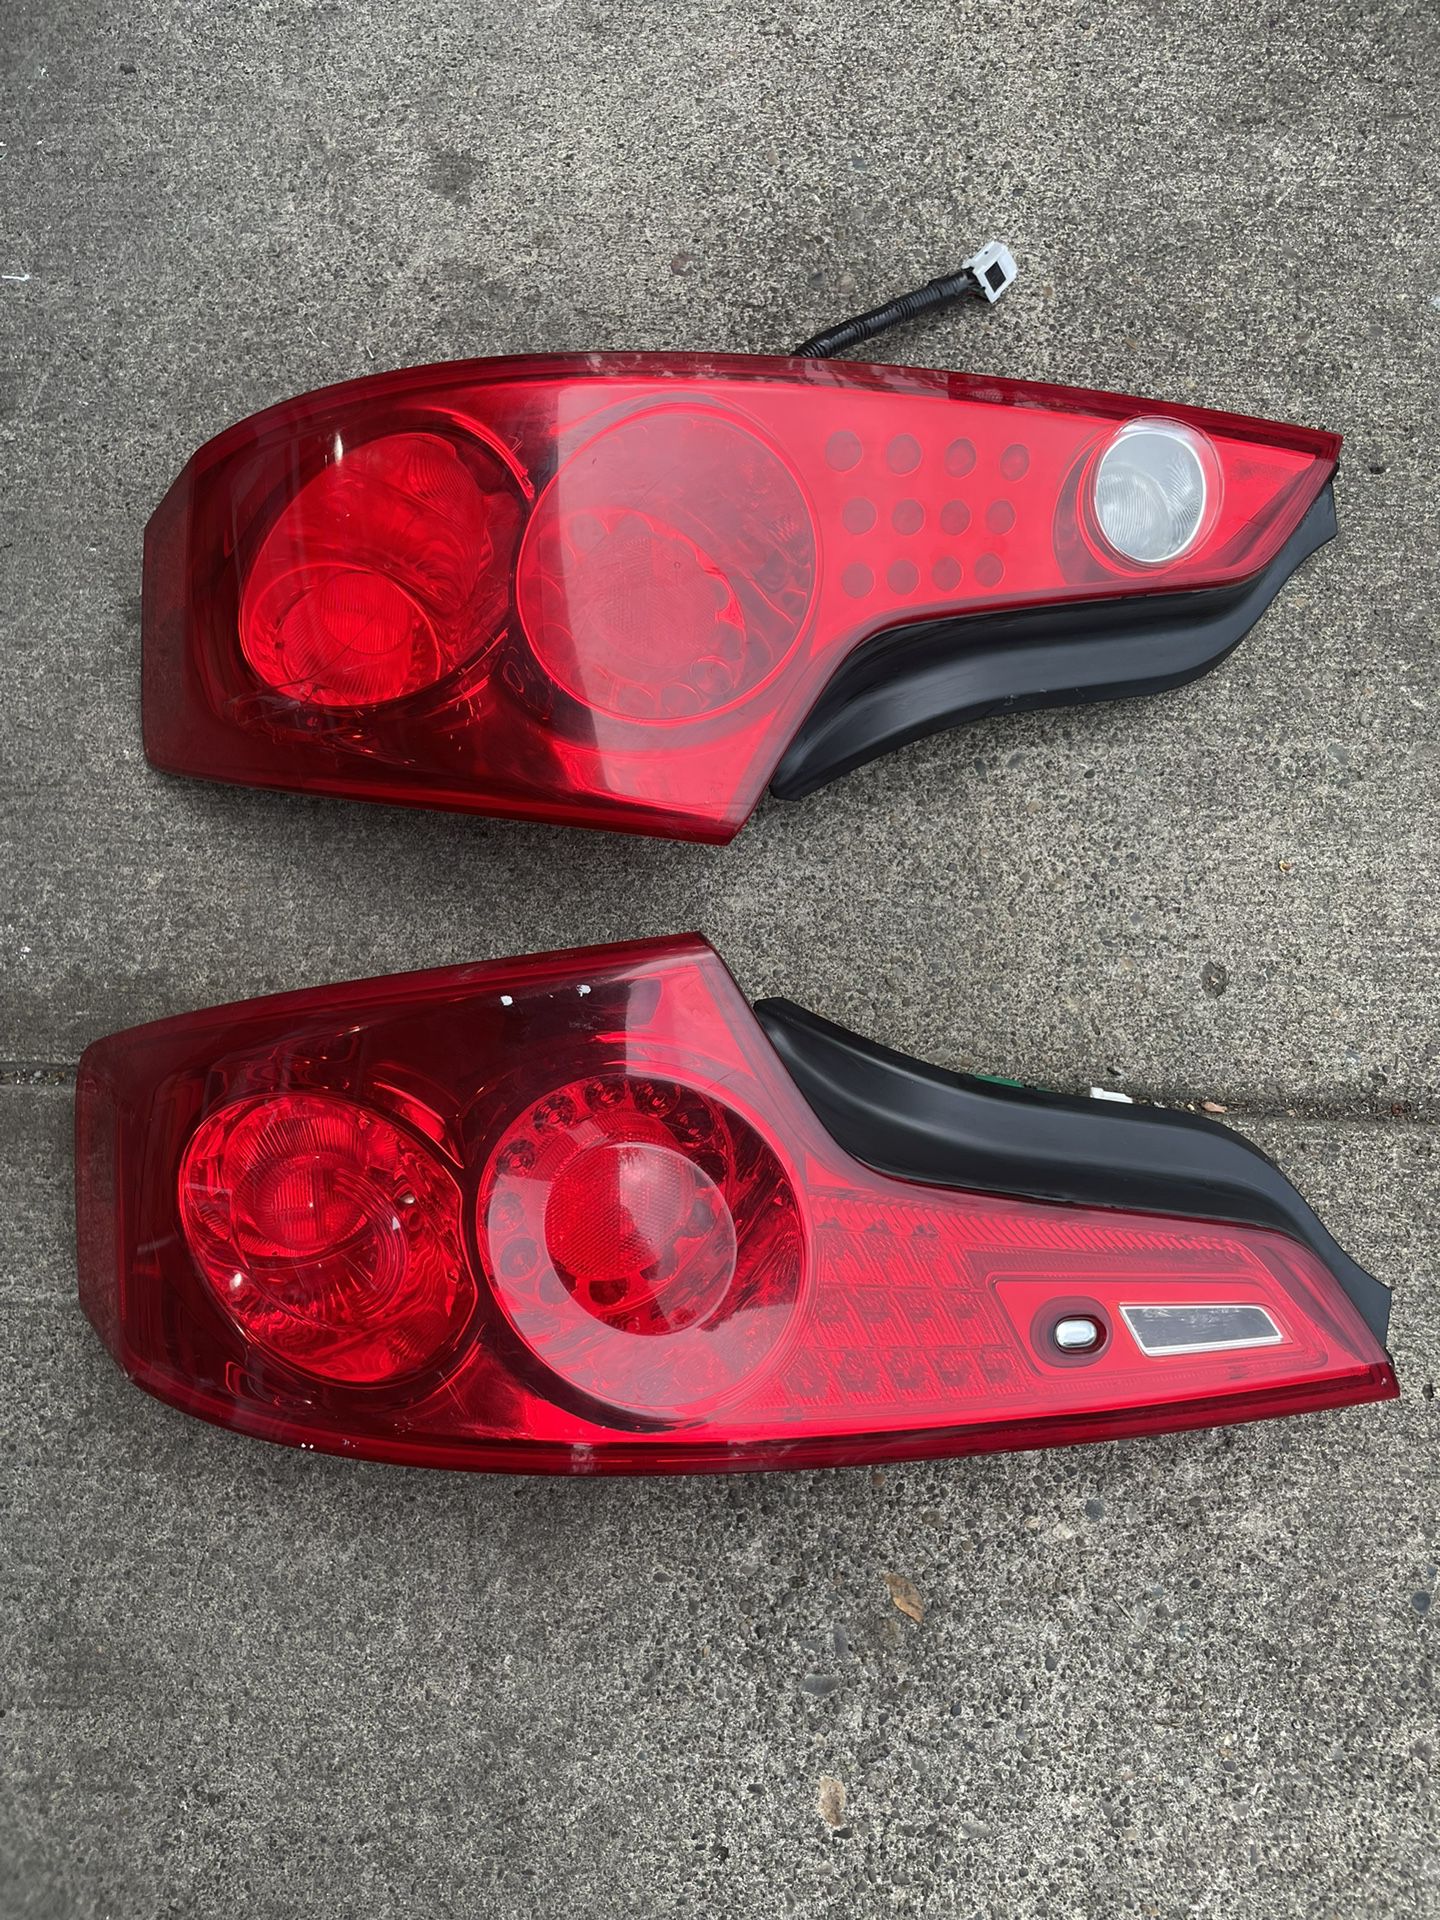 G35 Infiniti Taillights 